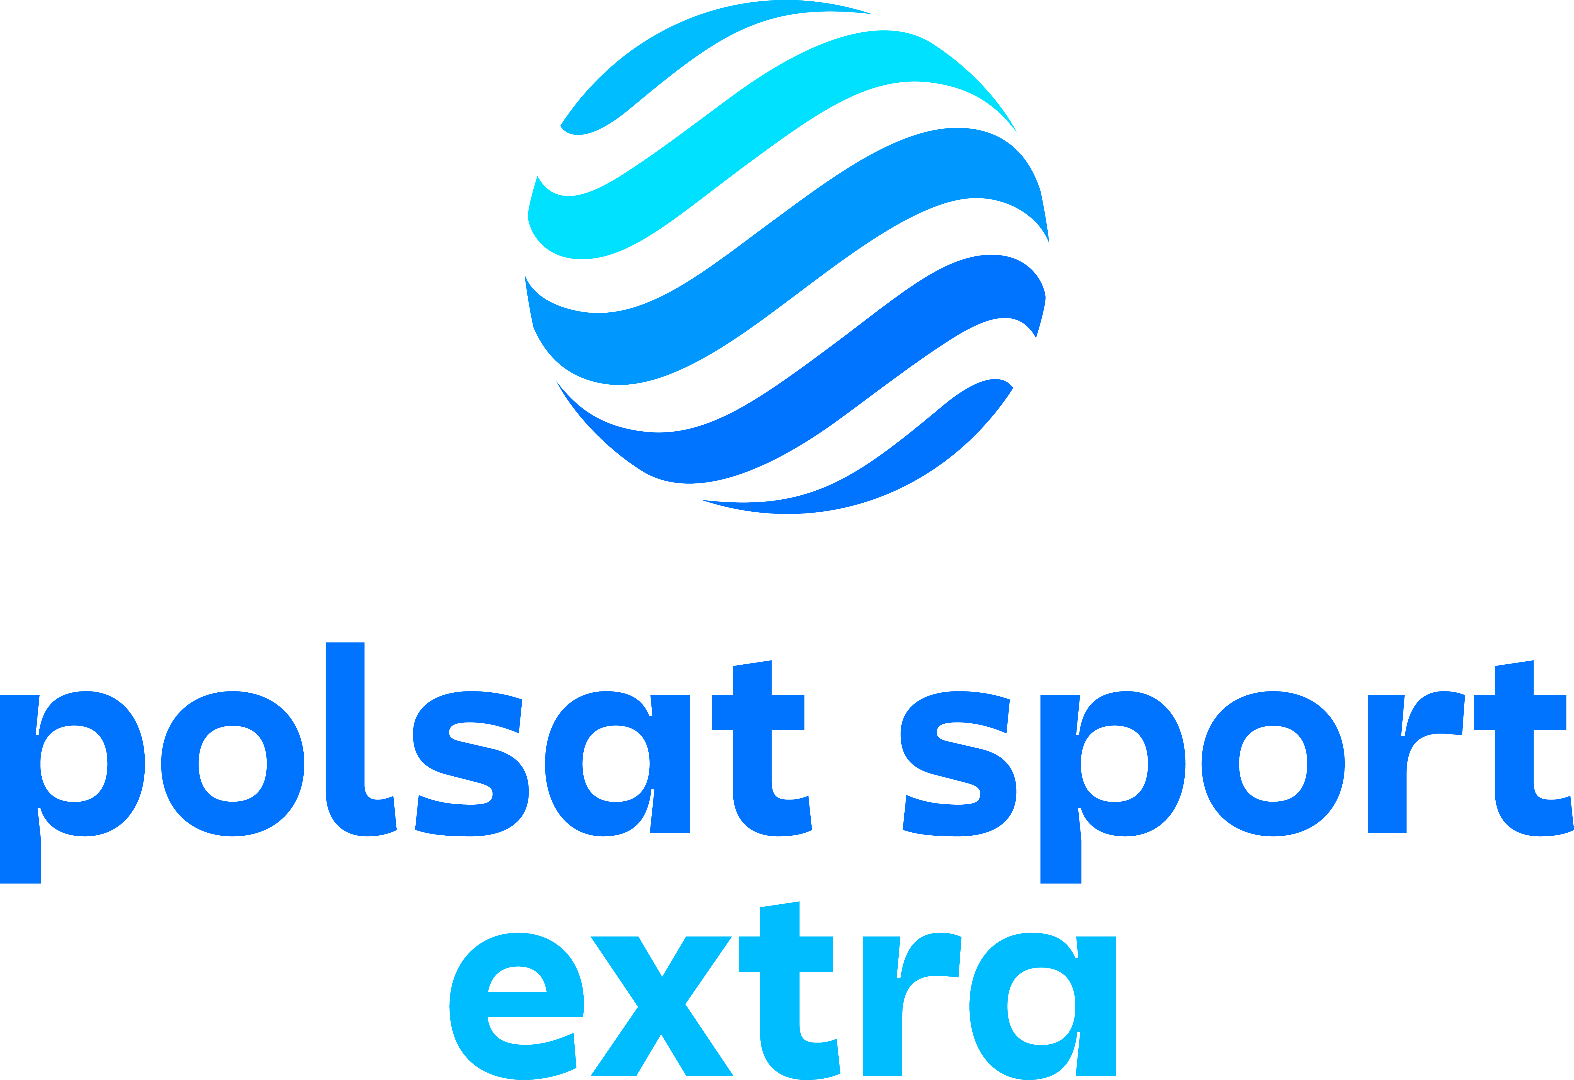 POLSAT_SPORT_EXTRA_RGB.png